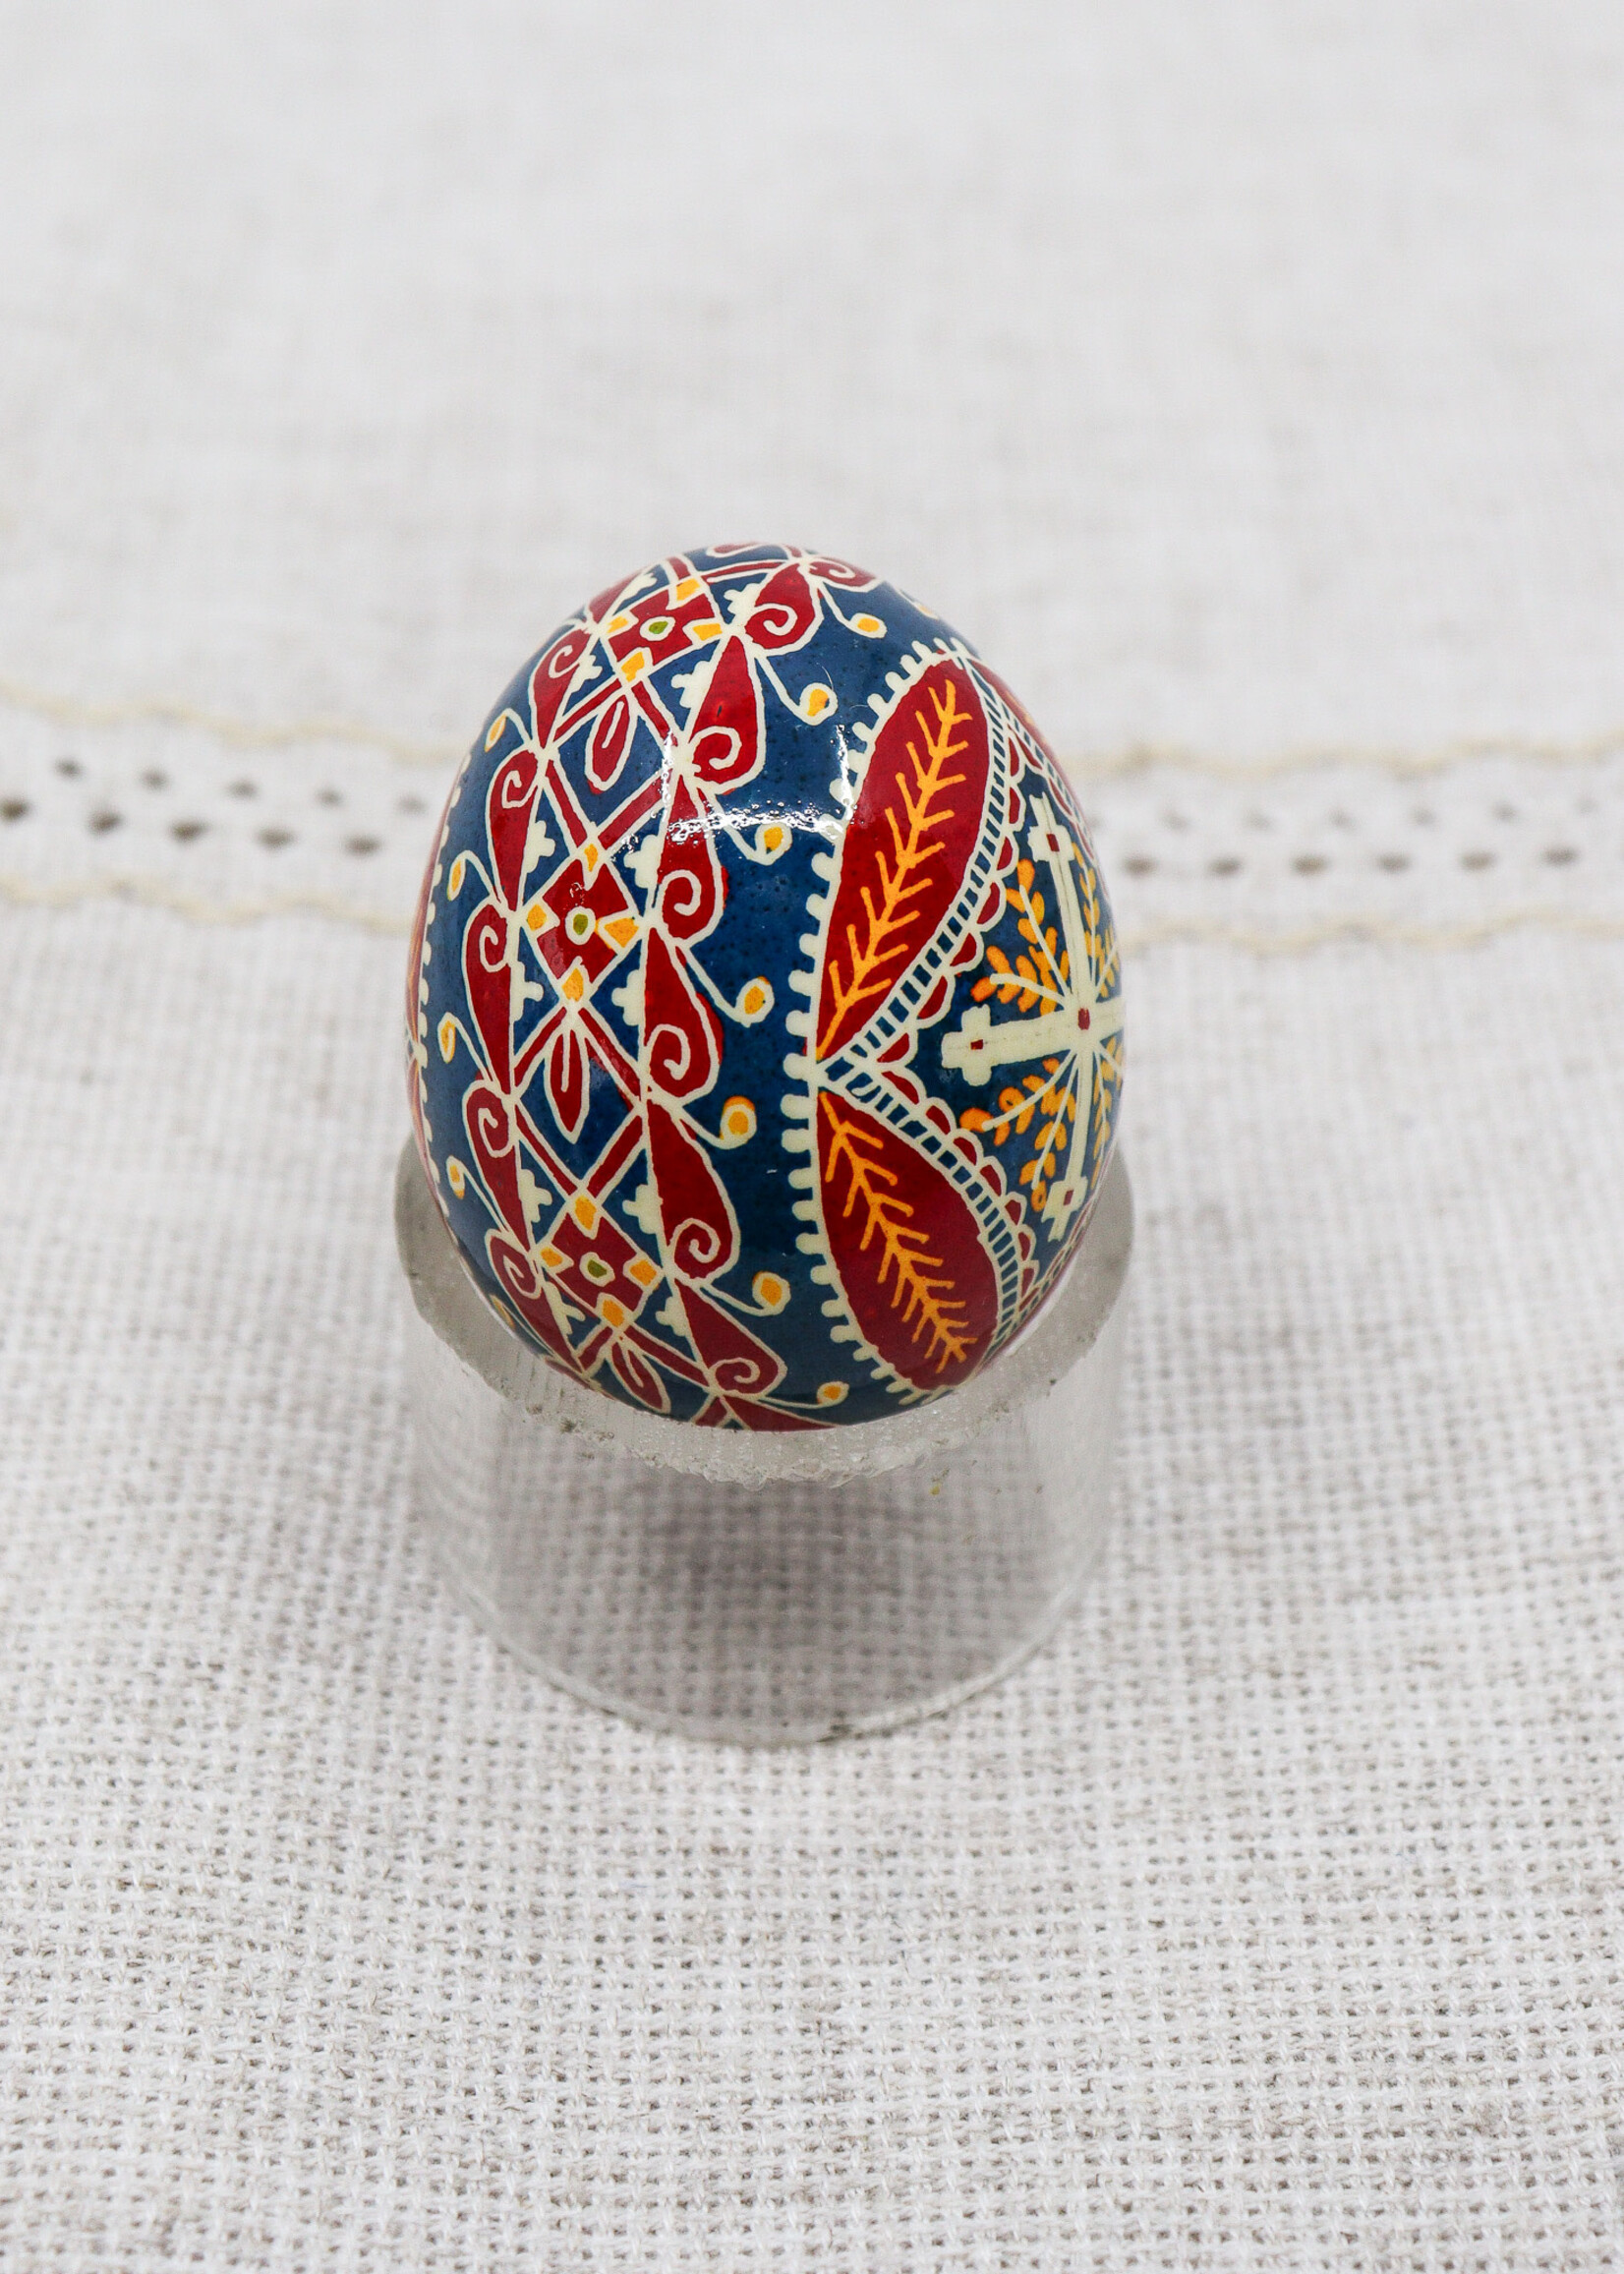 PYSANKA -  Ukrainian style handmade decorated eggs